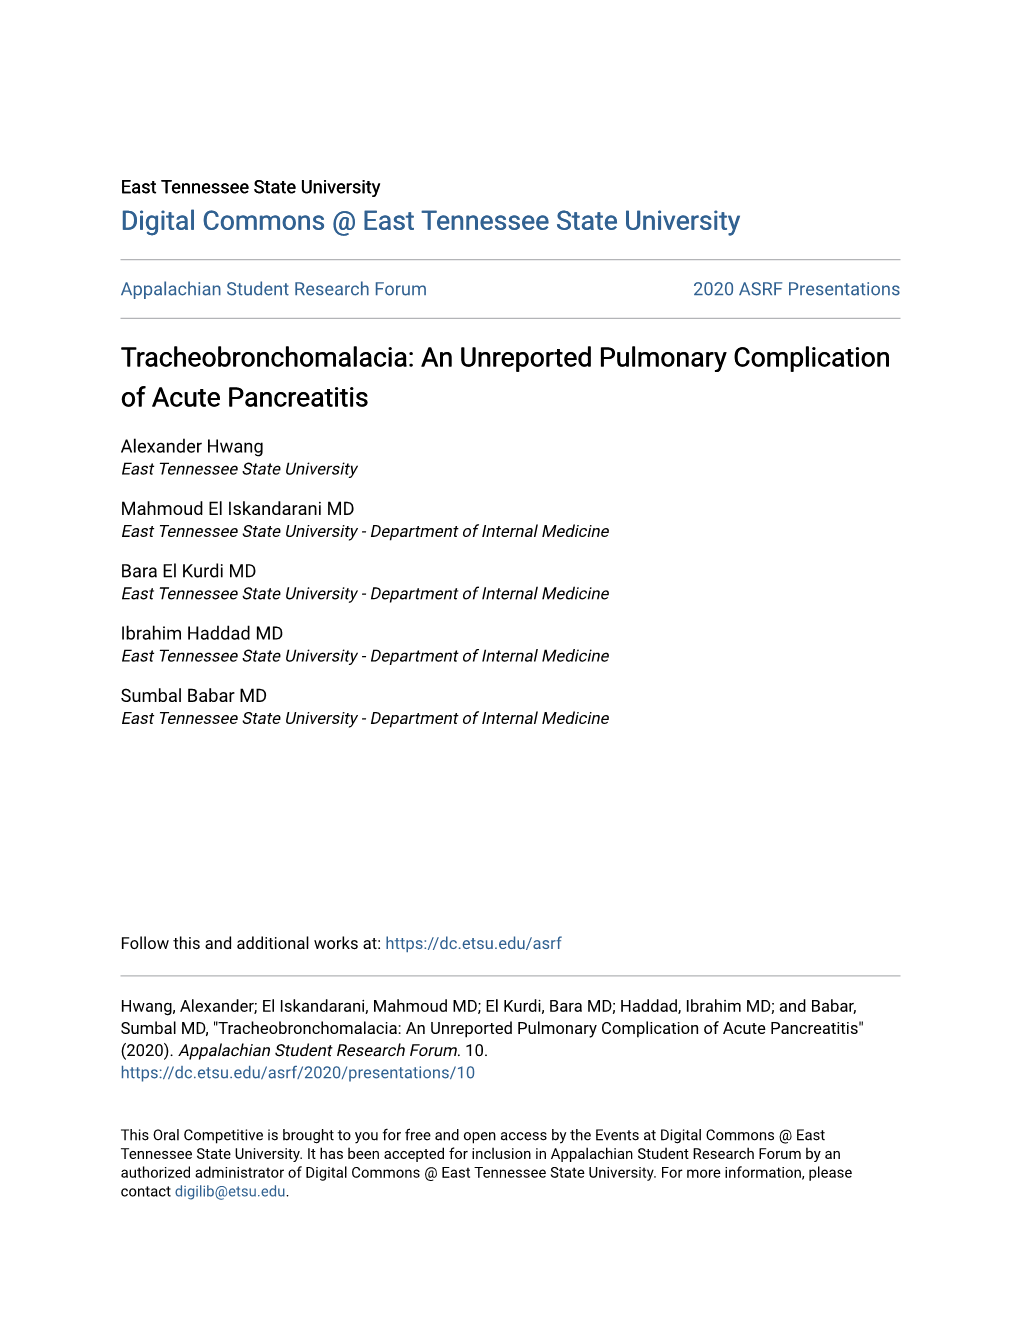 Tracheobronchomalacia: an Unreported Pulmonary Complication of Acute Pancreatitis